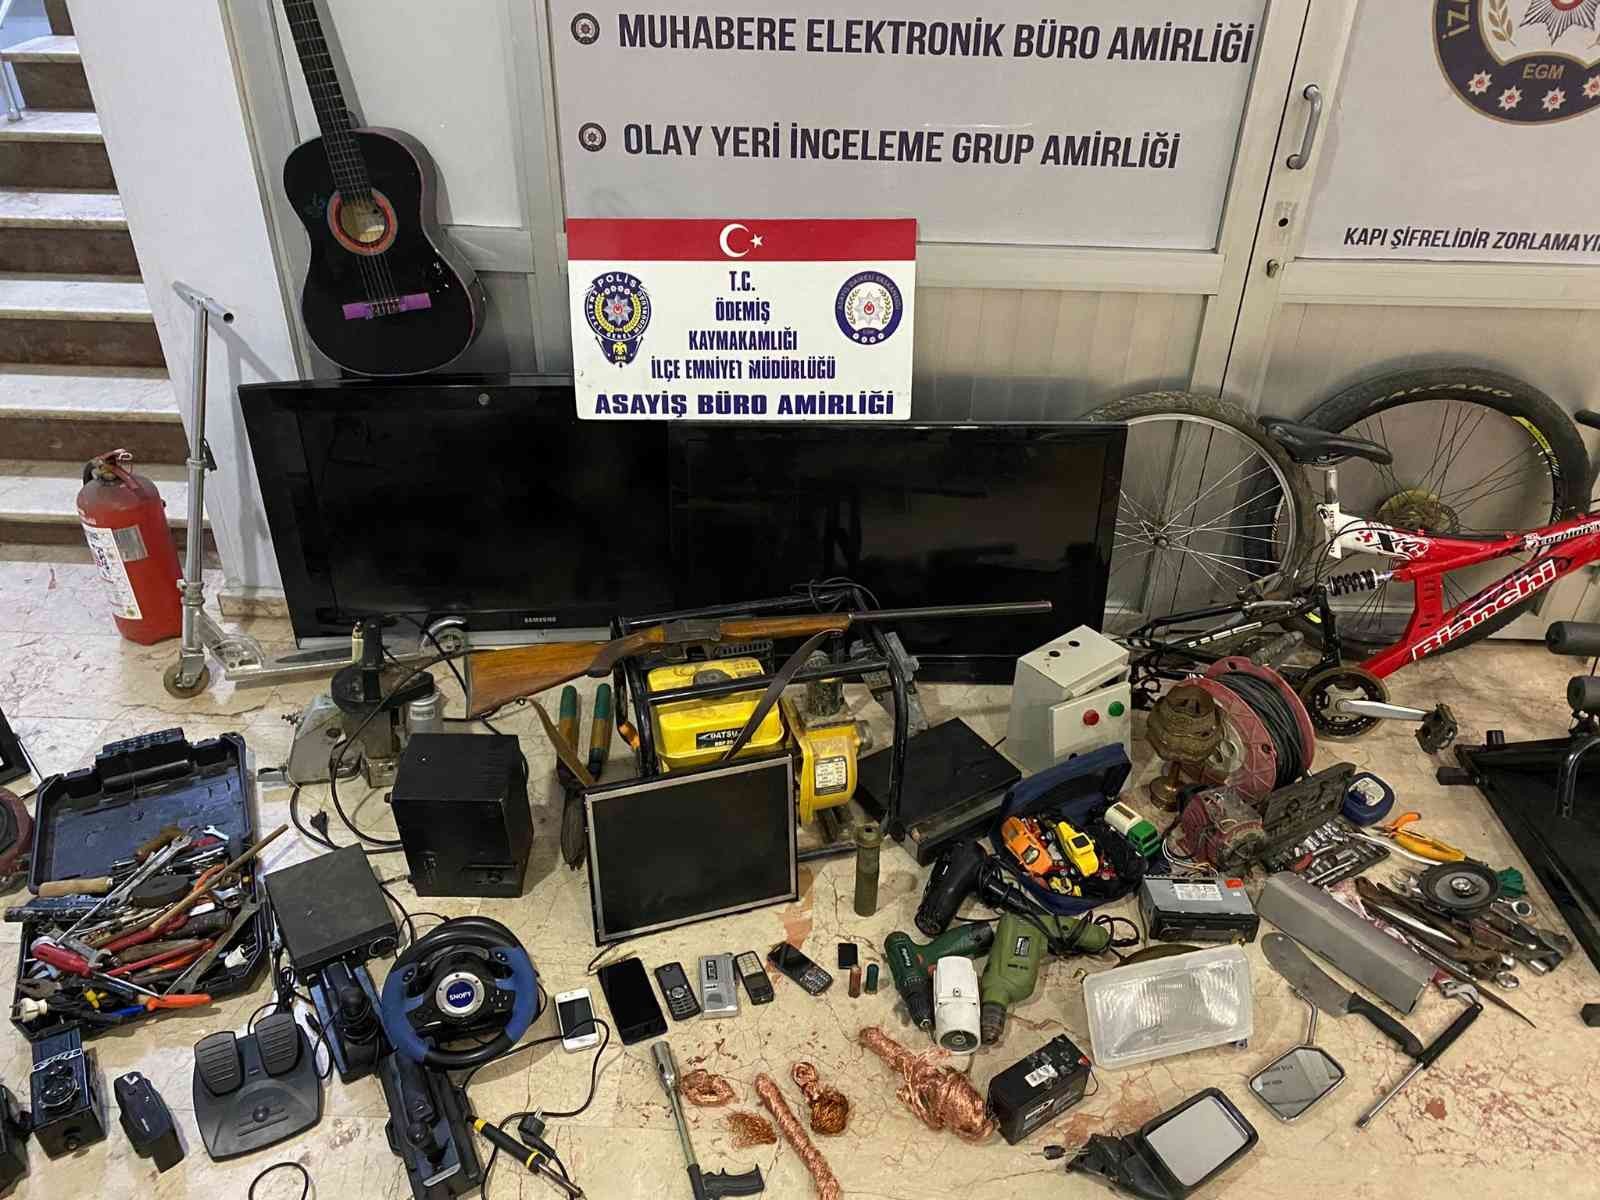 Azılı hırsız, evi elektronik mağazaya çevirmiş #izmir